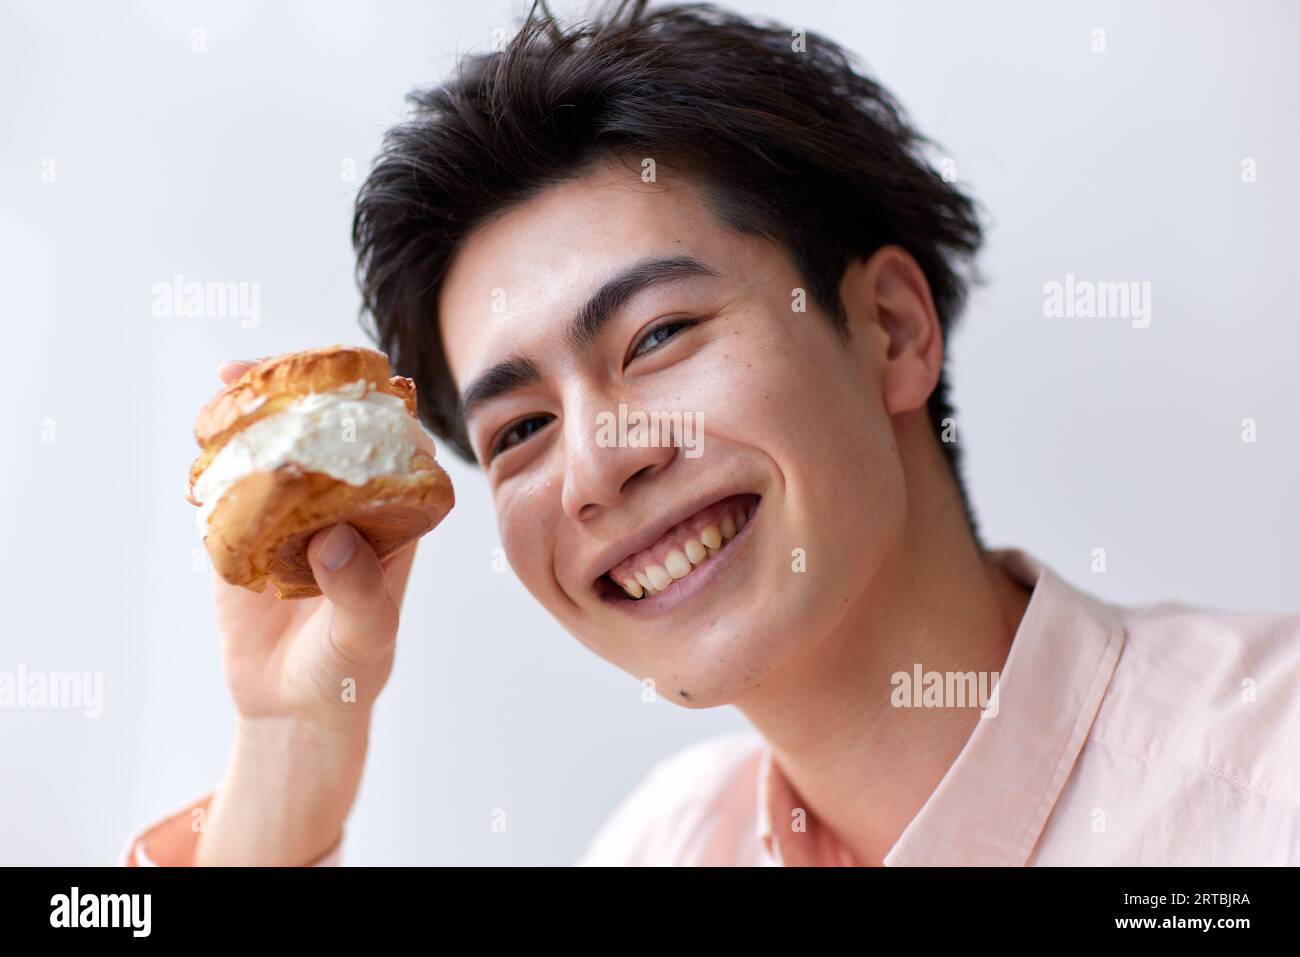 Japanese man eating at home Stock Photo